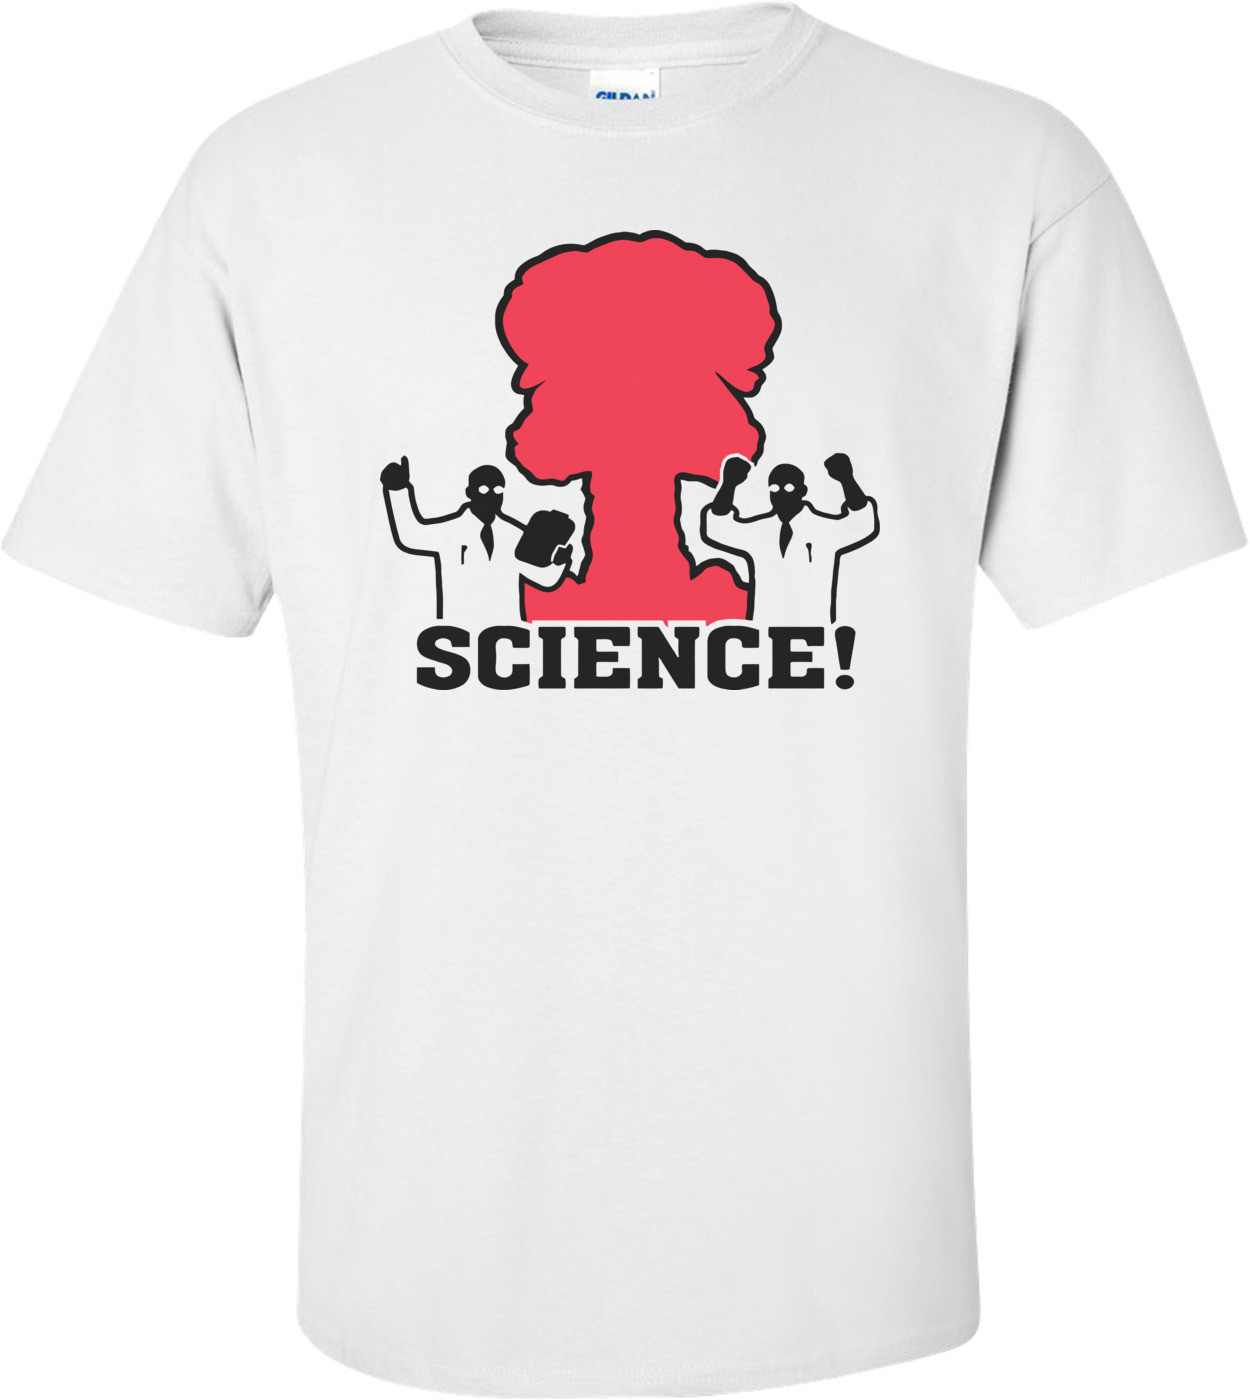 Science! Shirt